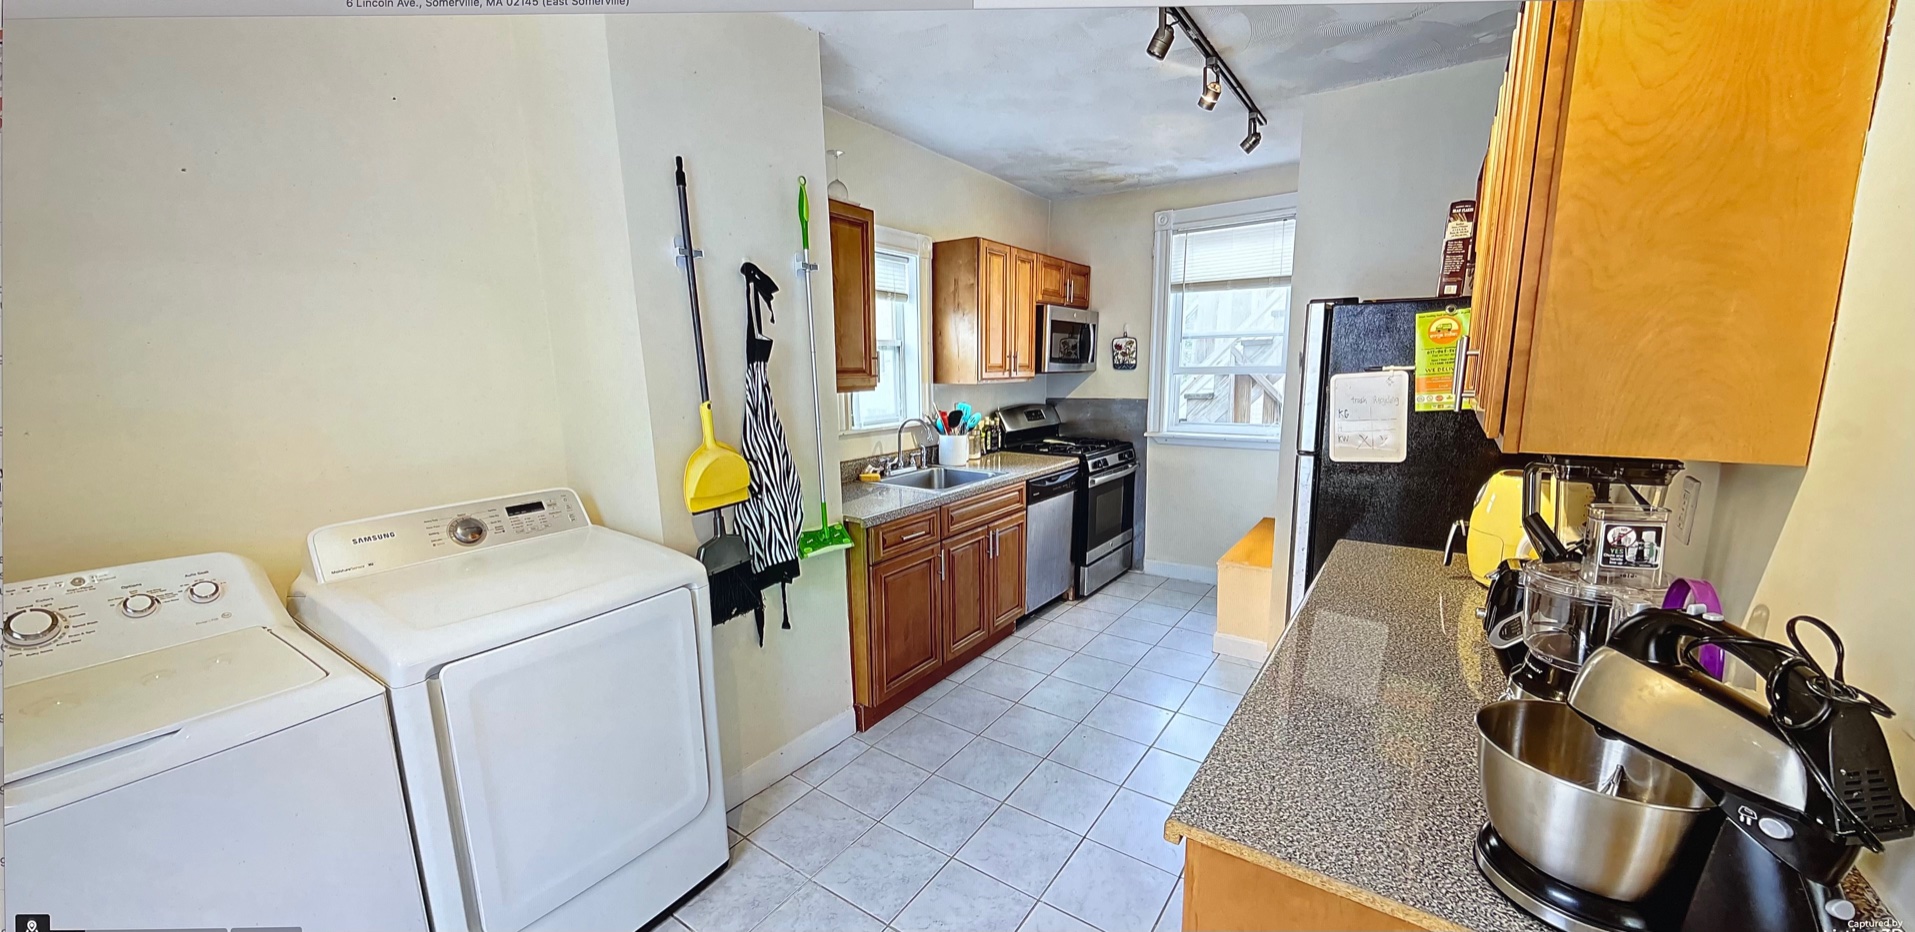 Photos of apartment on Vernon St.,Somerville MA 02145